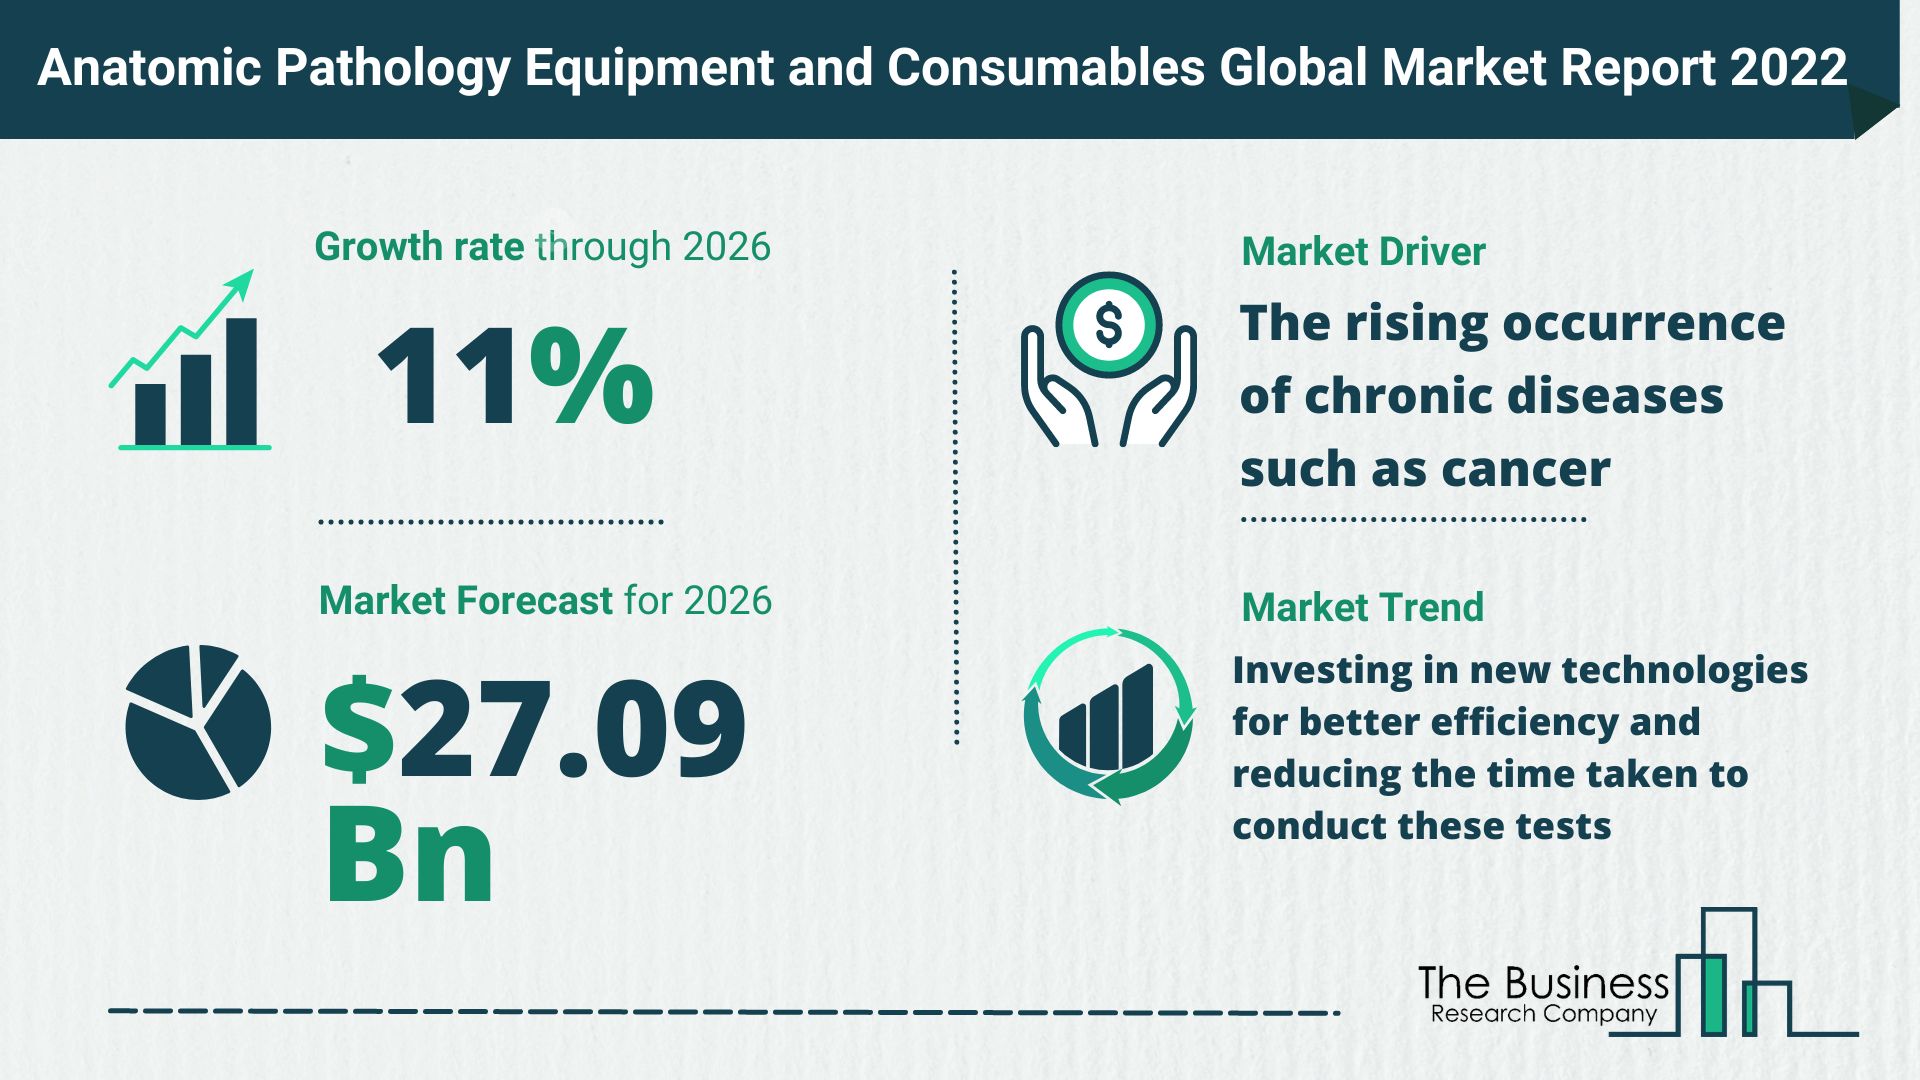 Global Anatomic Pathology Equipment and Consumables Market